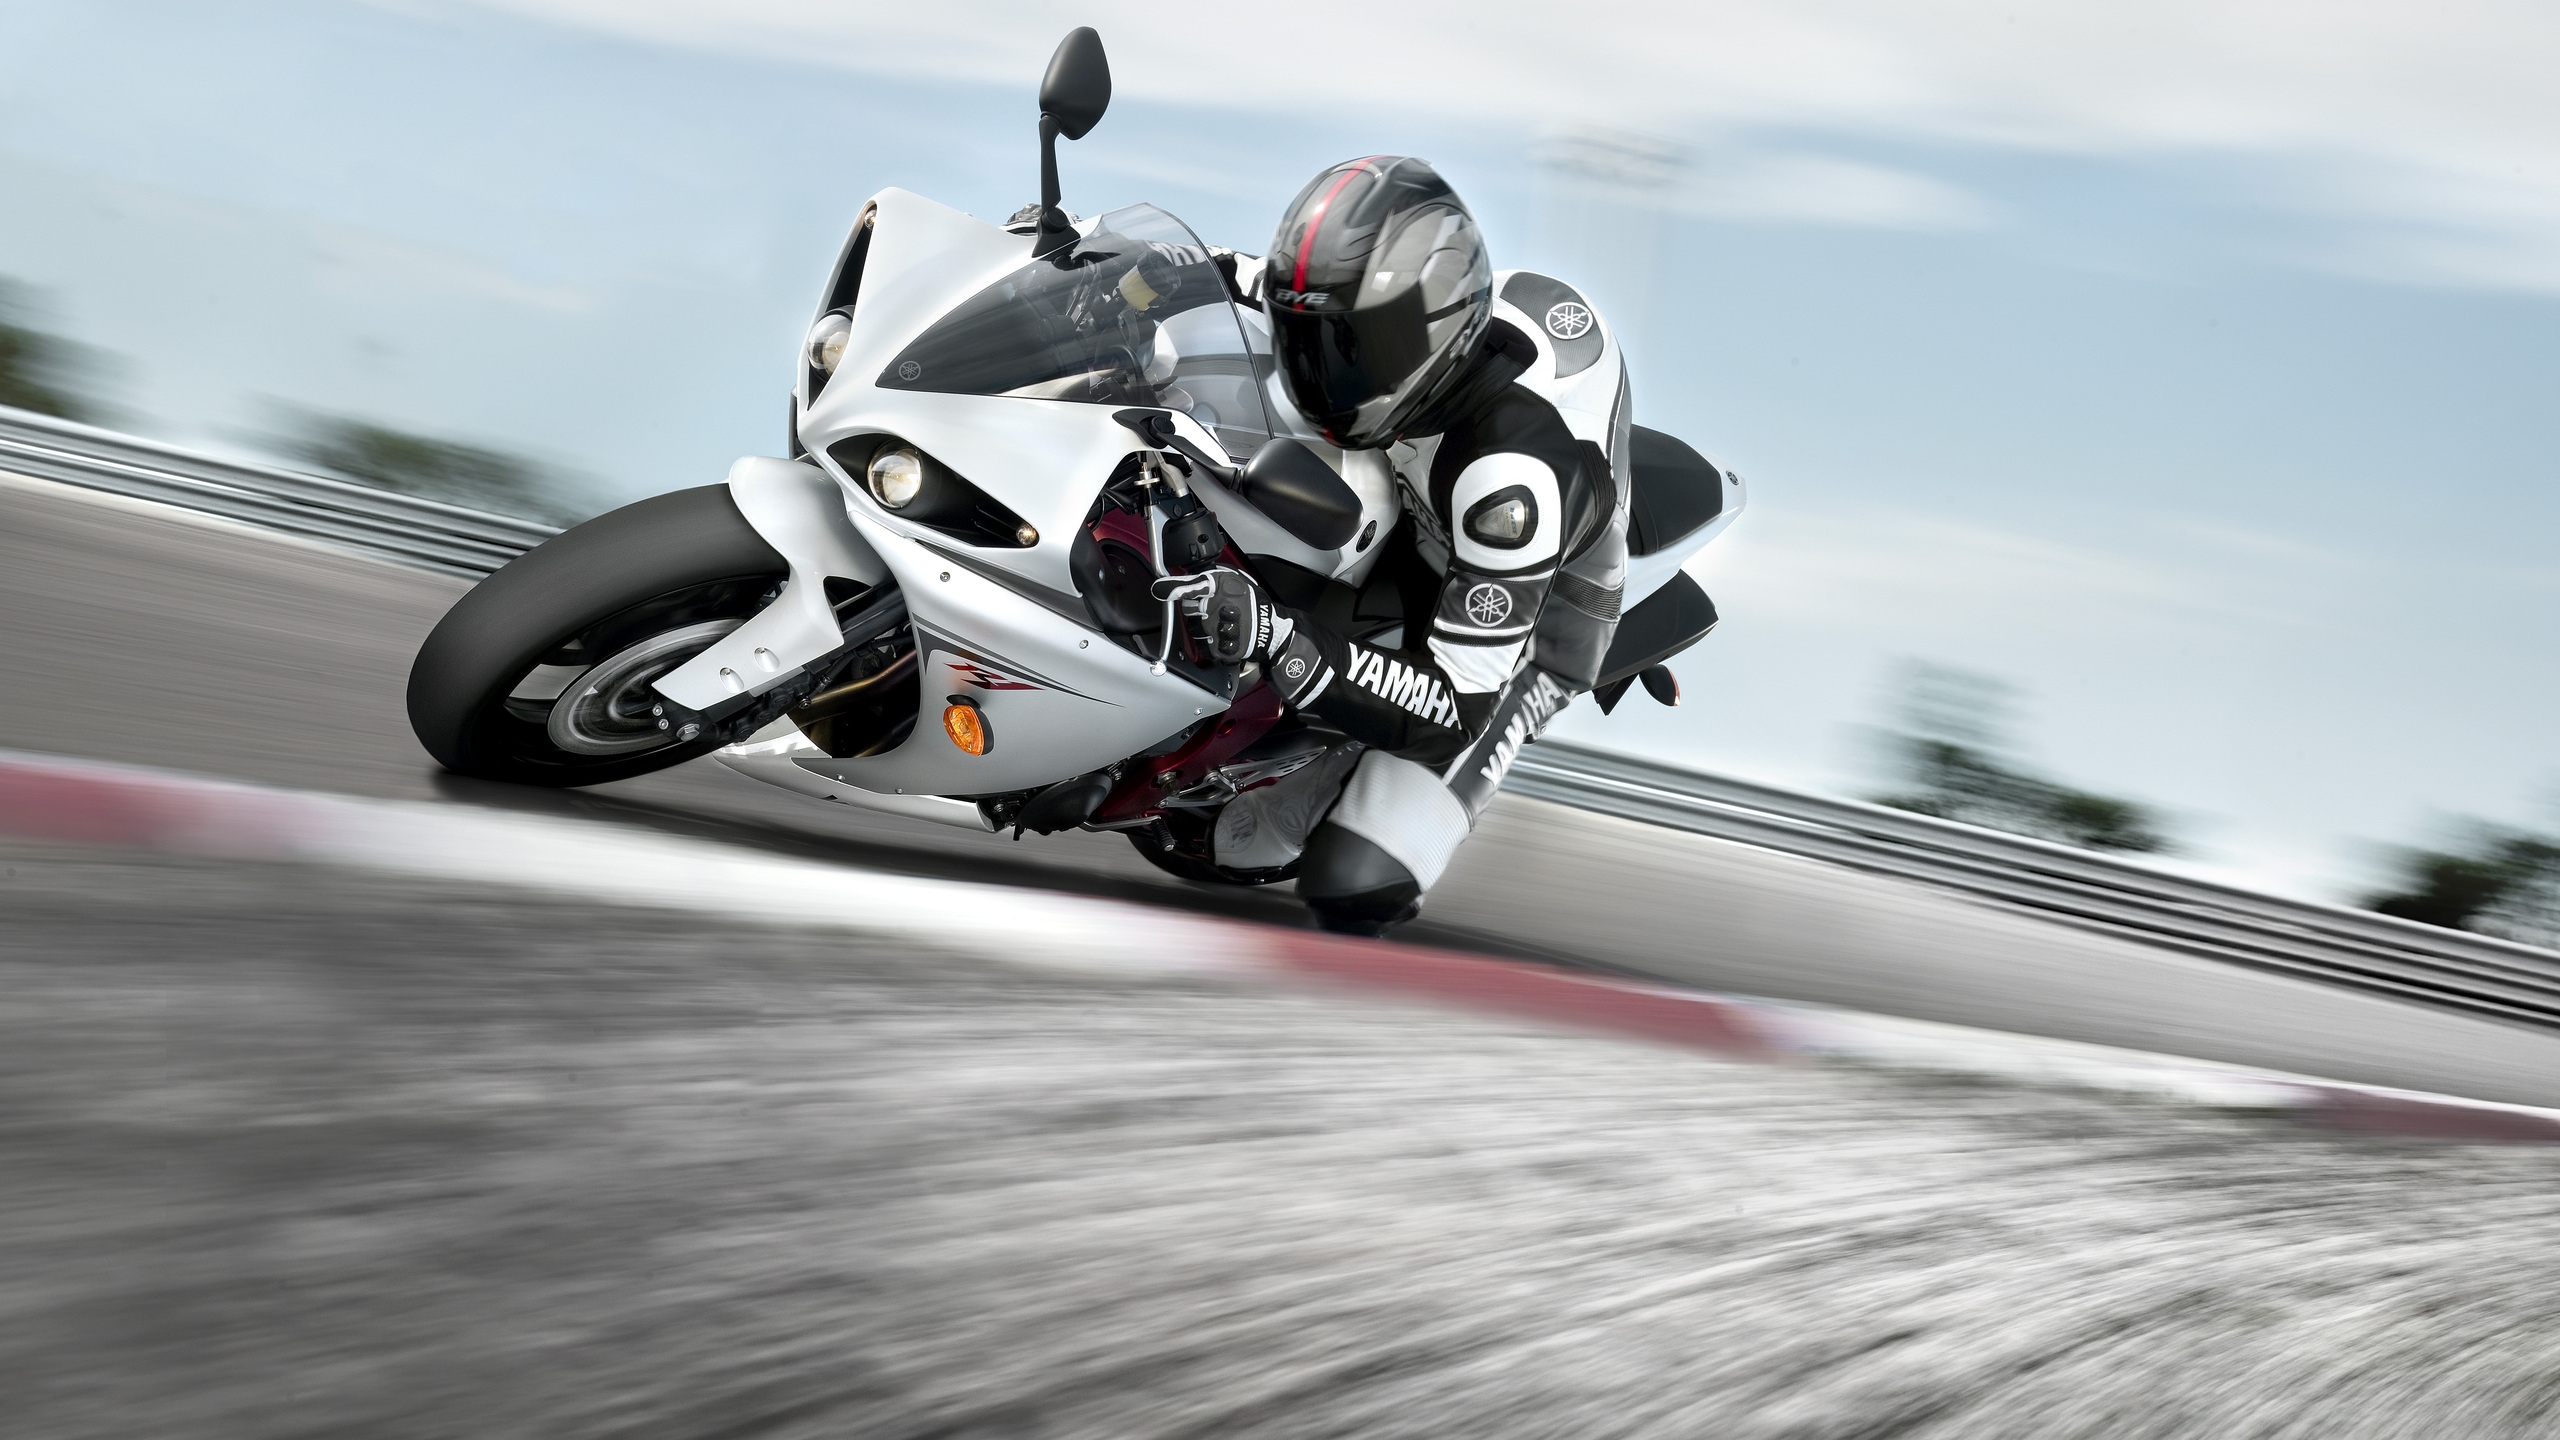 Yamaha Speed Racing for 2560x1440 HDTV resolution